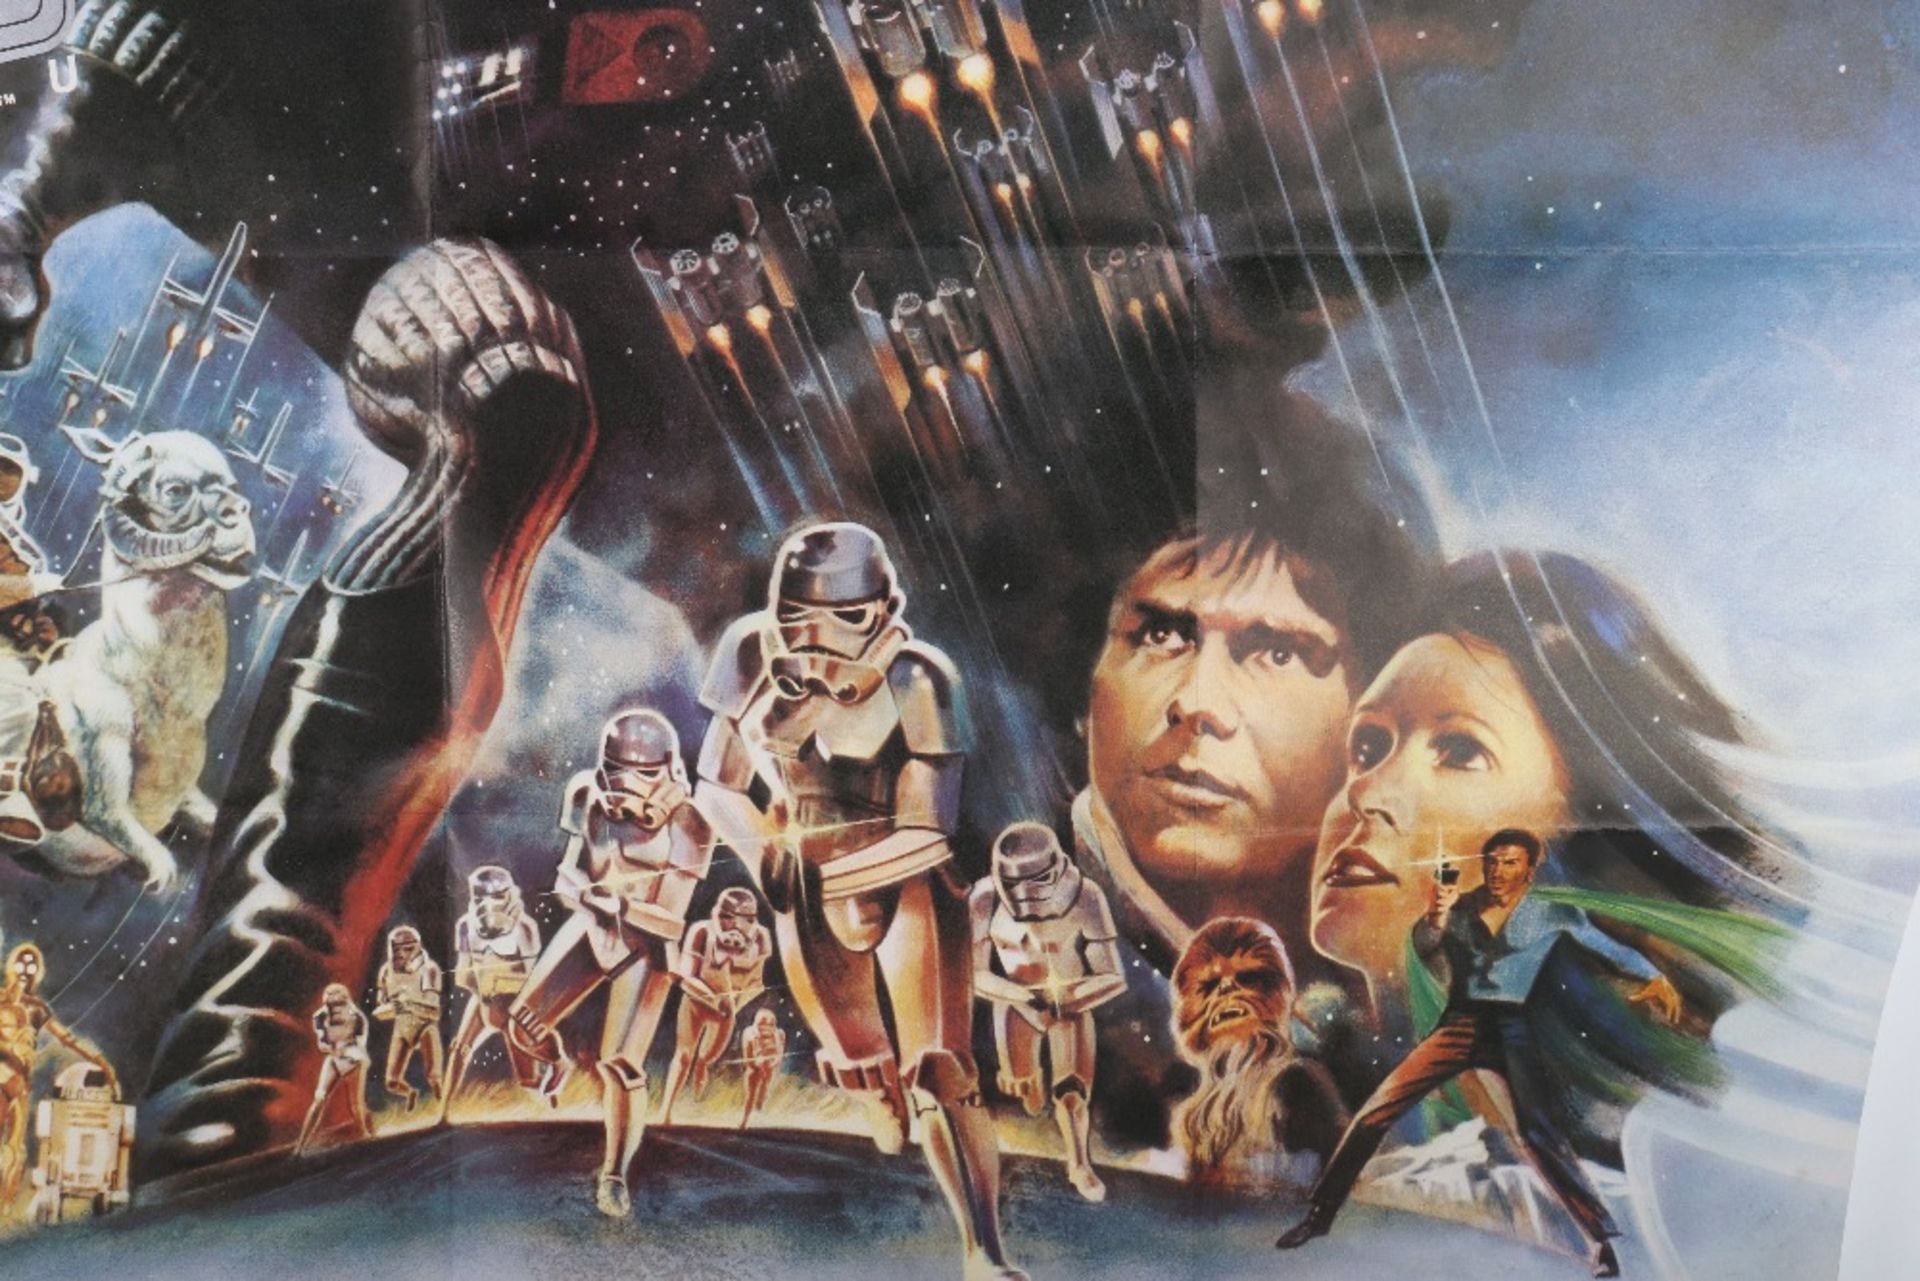 Star Wars The Empire Strikes Back 1980 UK Quad Original Film Poster - Image 7 of 8